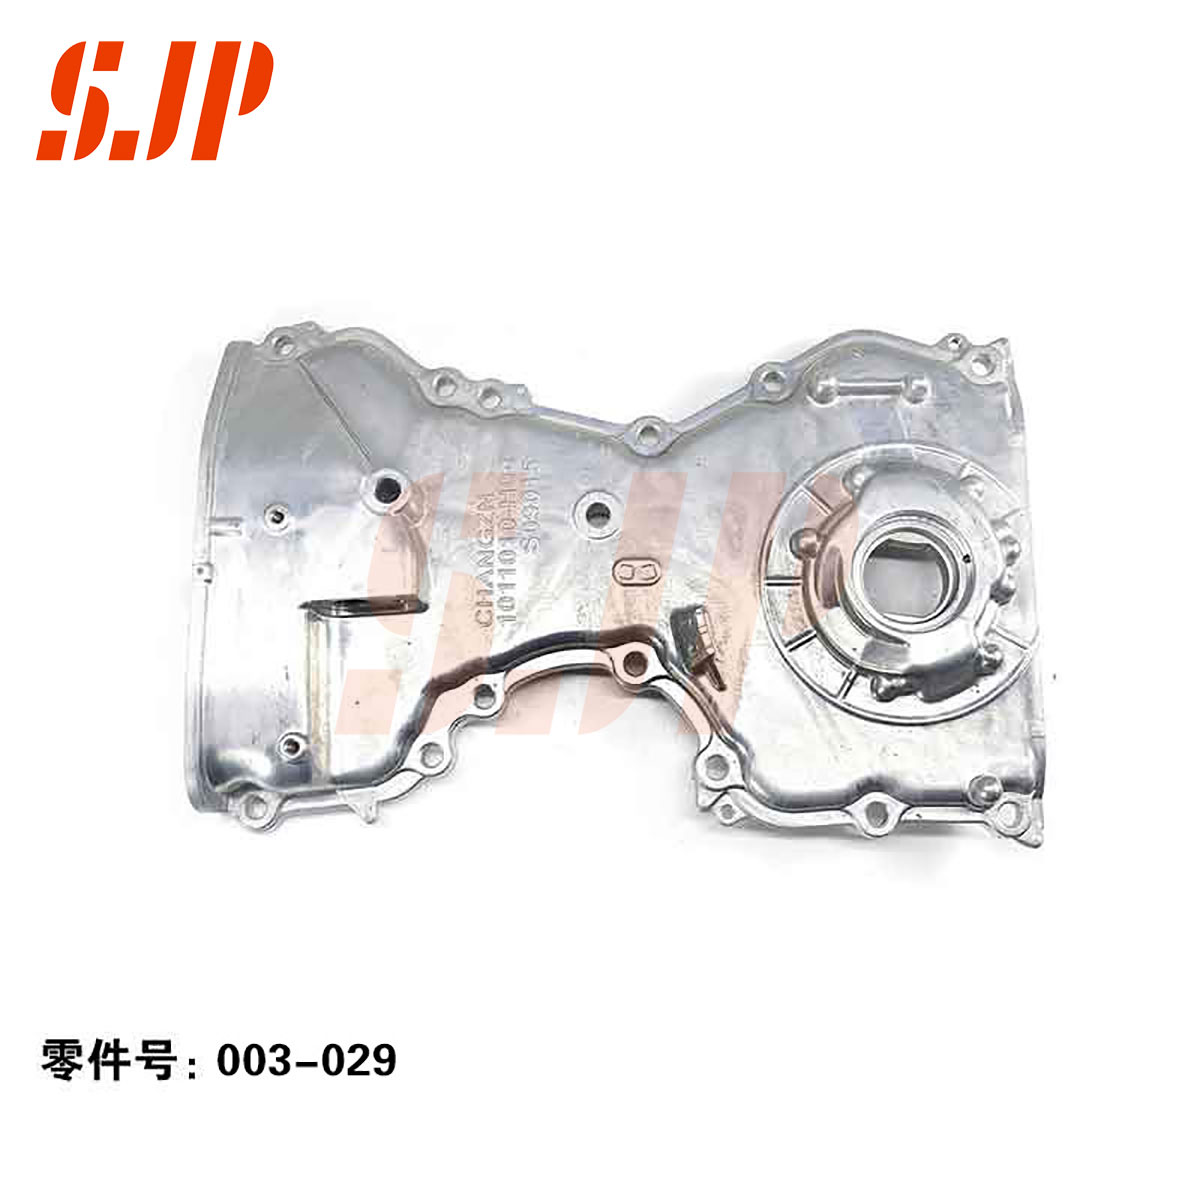 SJ-003-029 Oil Pump For Changan Auto 473VVT/Rear Wheel Drive